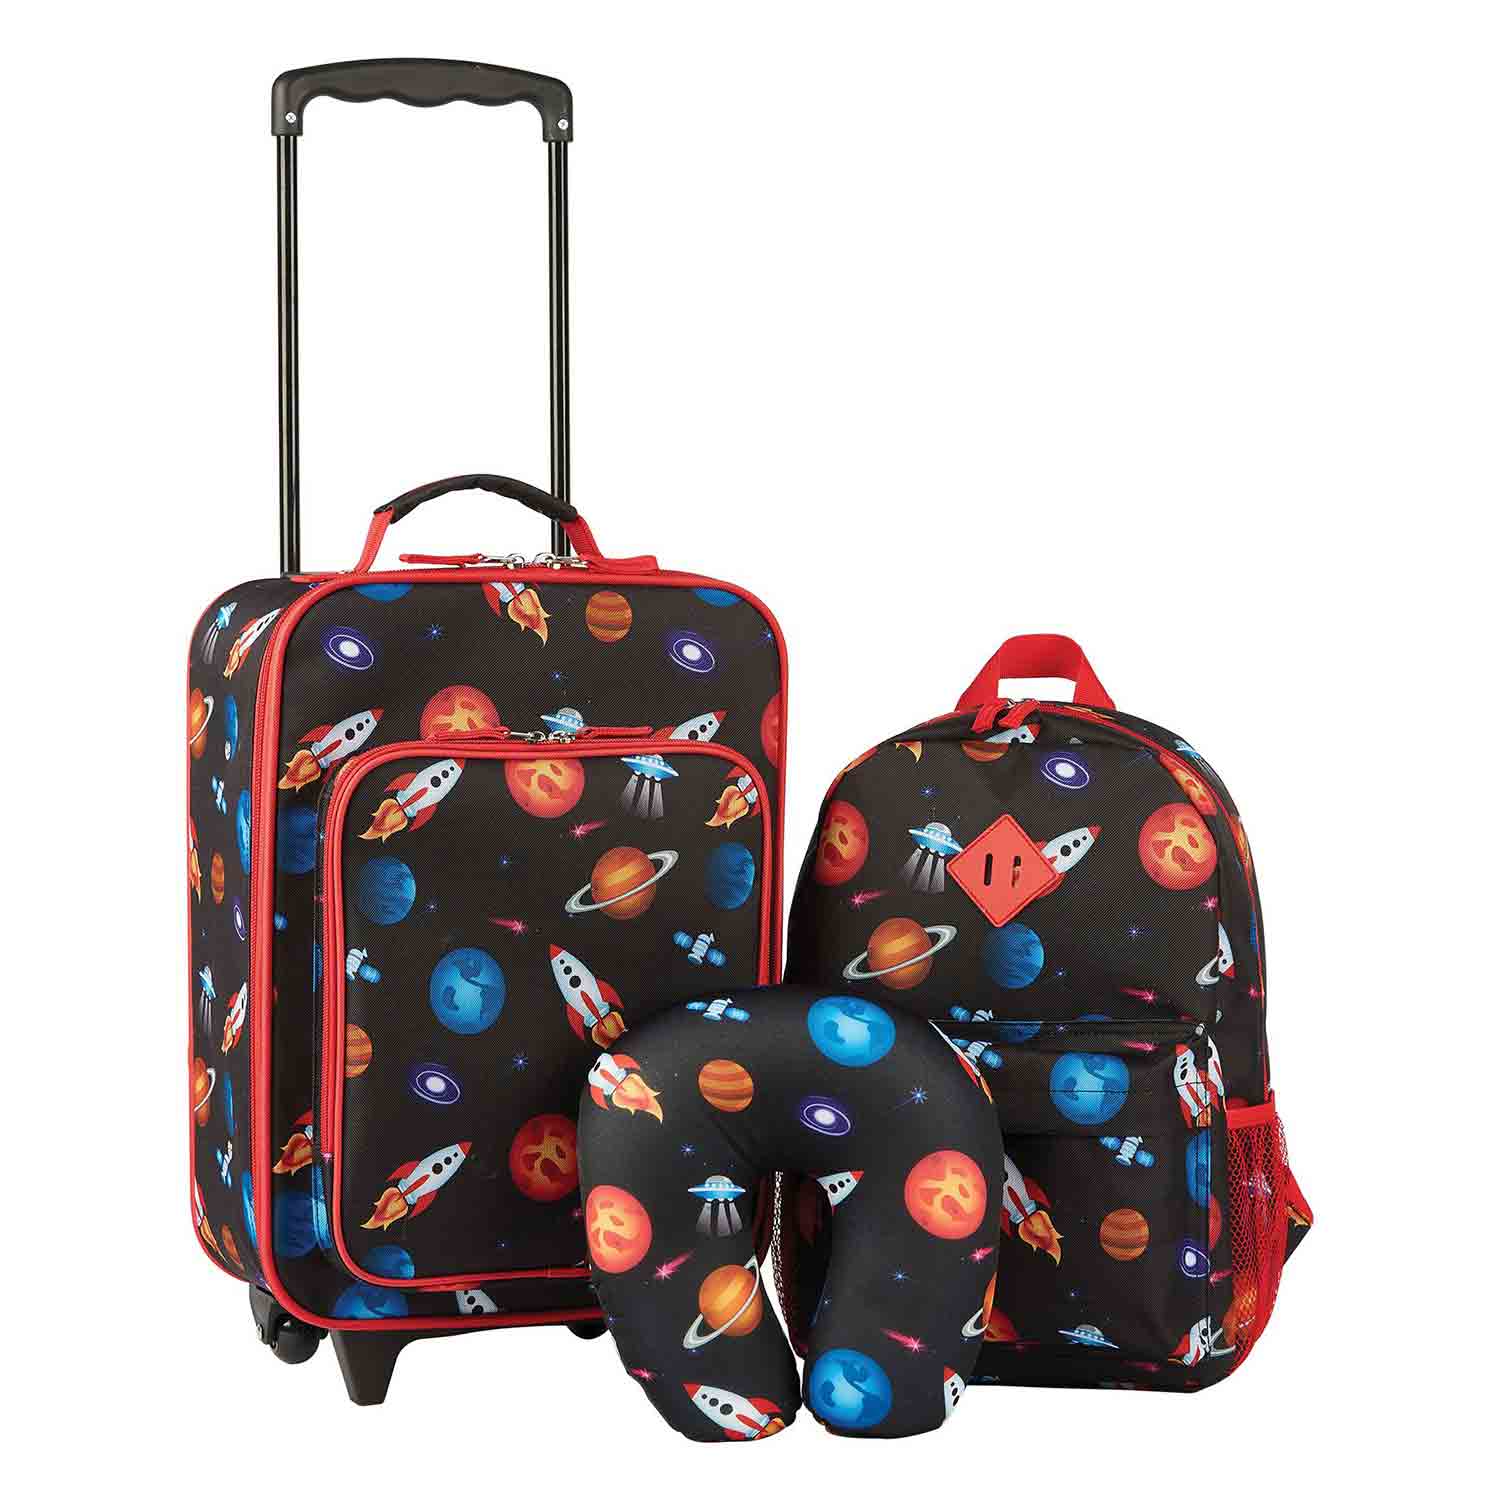 Protege Kids 3-Piece Luggage Set